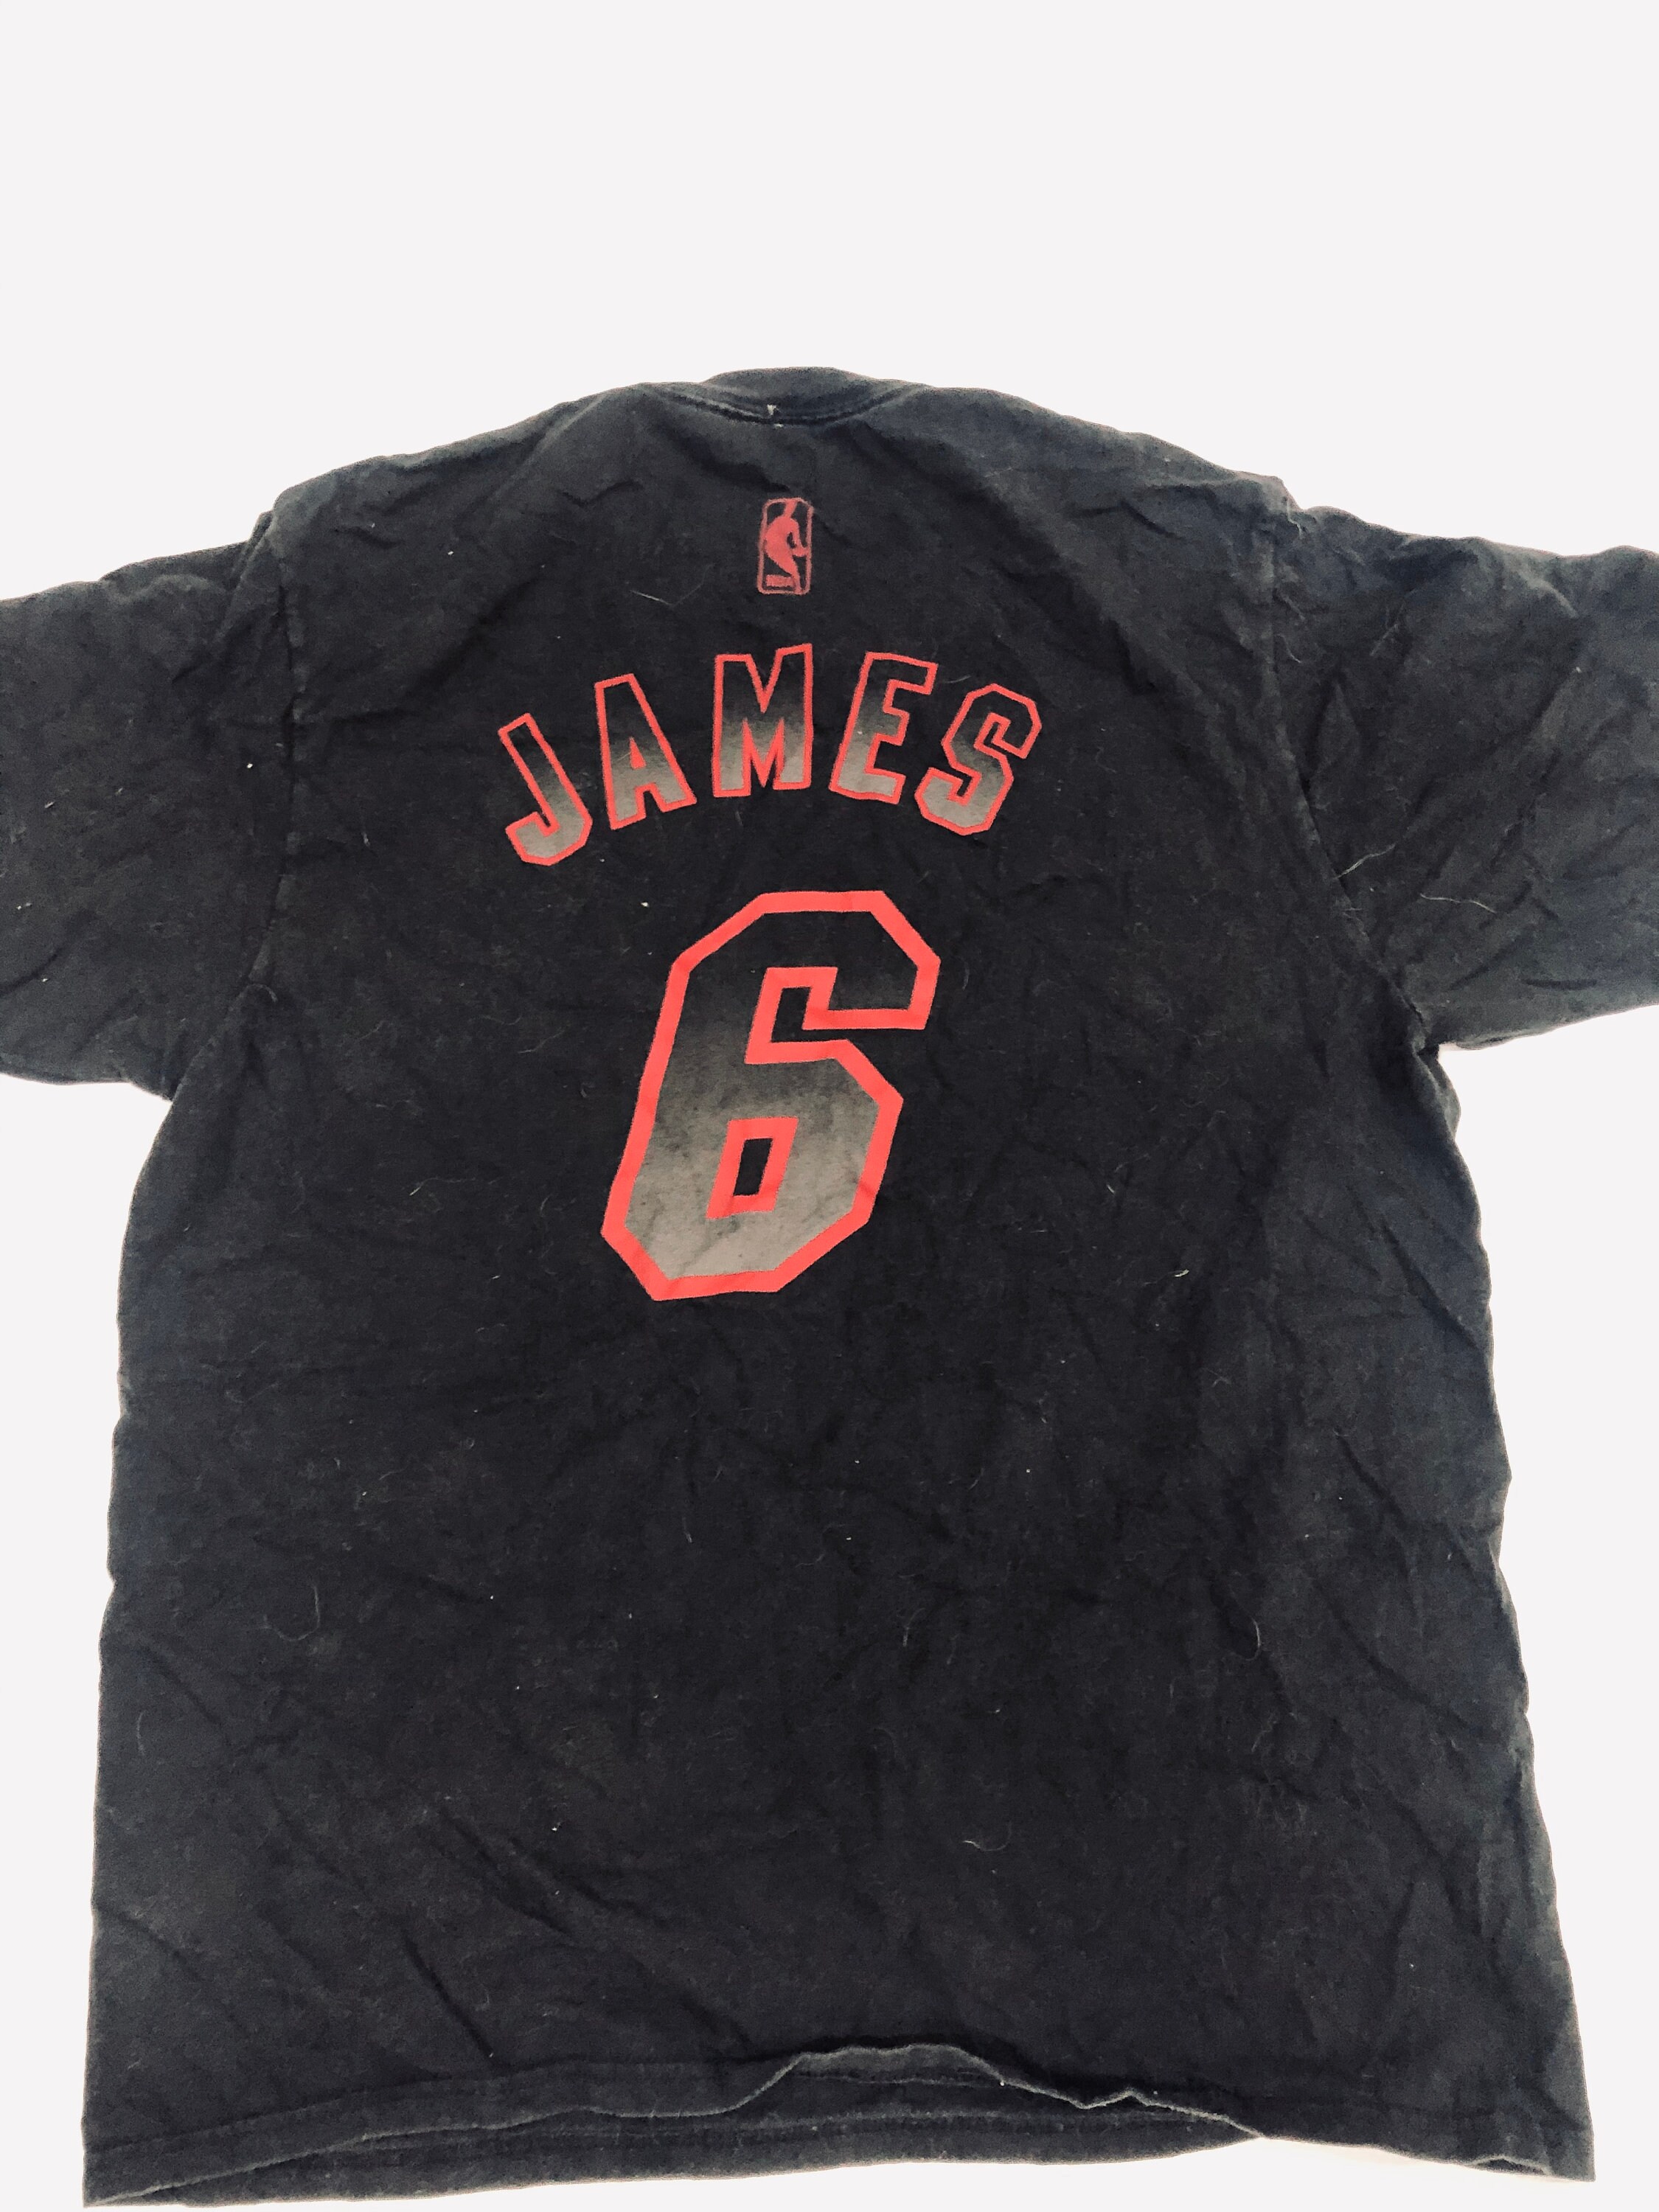 Adidas Miami Heat Jersey Home White Lebron James Mens Size 50 6 Authentic